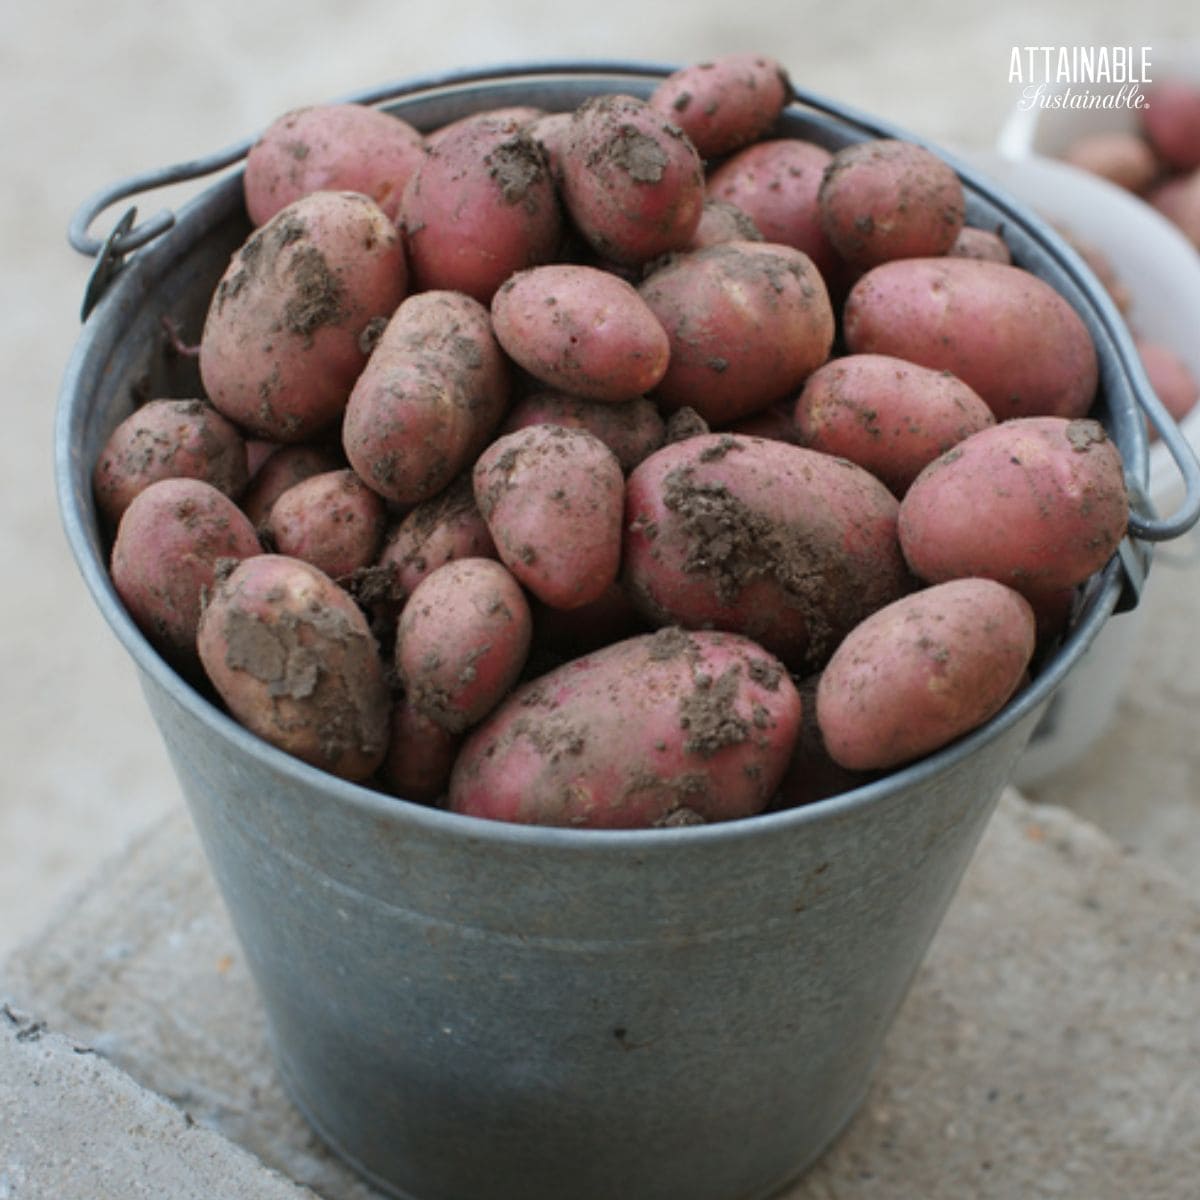 Growing Potatoes: Planting, Growing, and Harvesting Potatoes